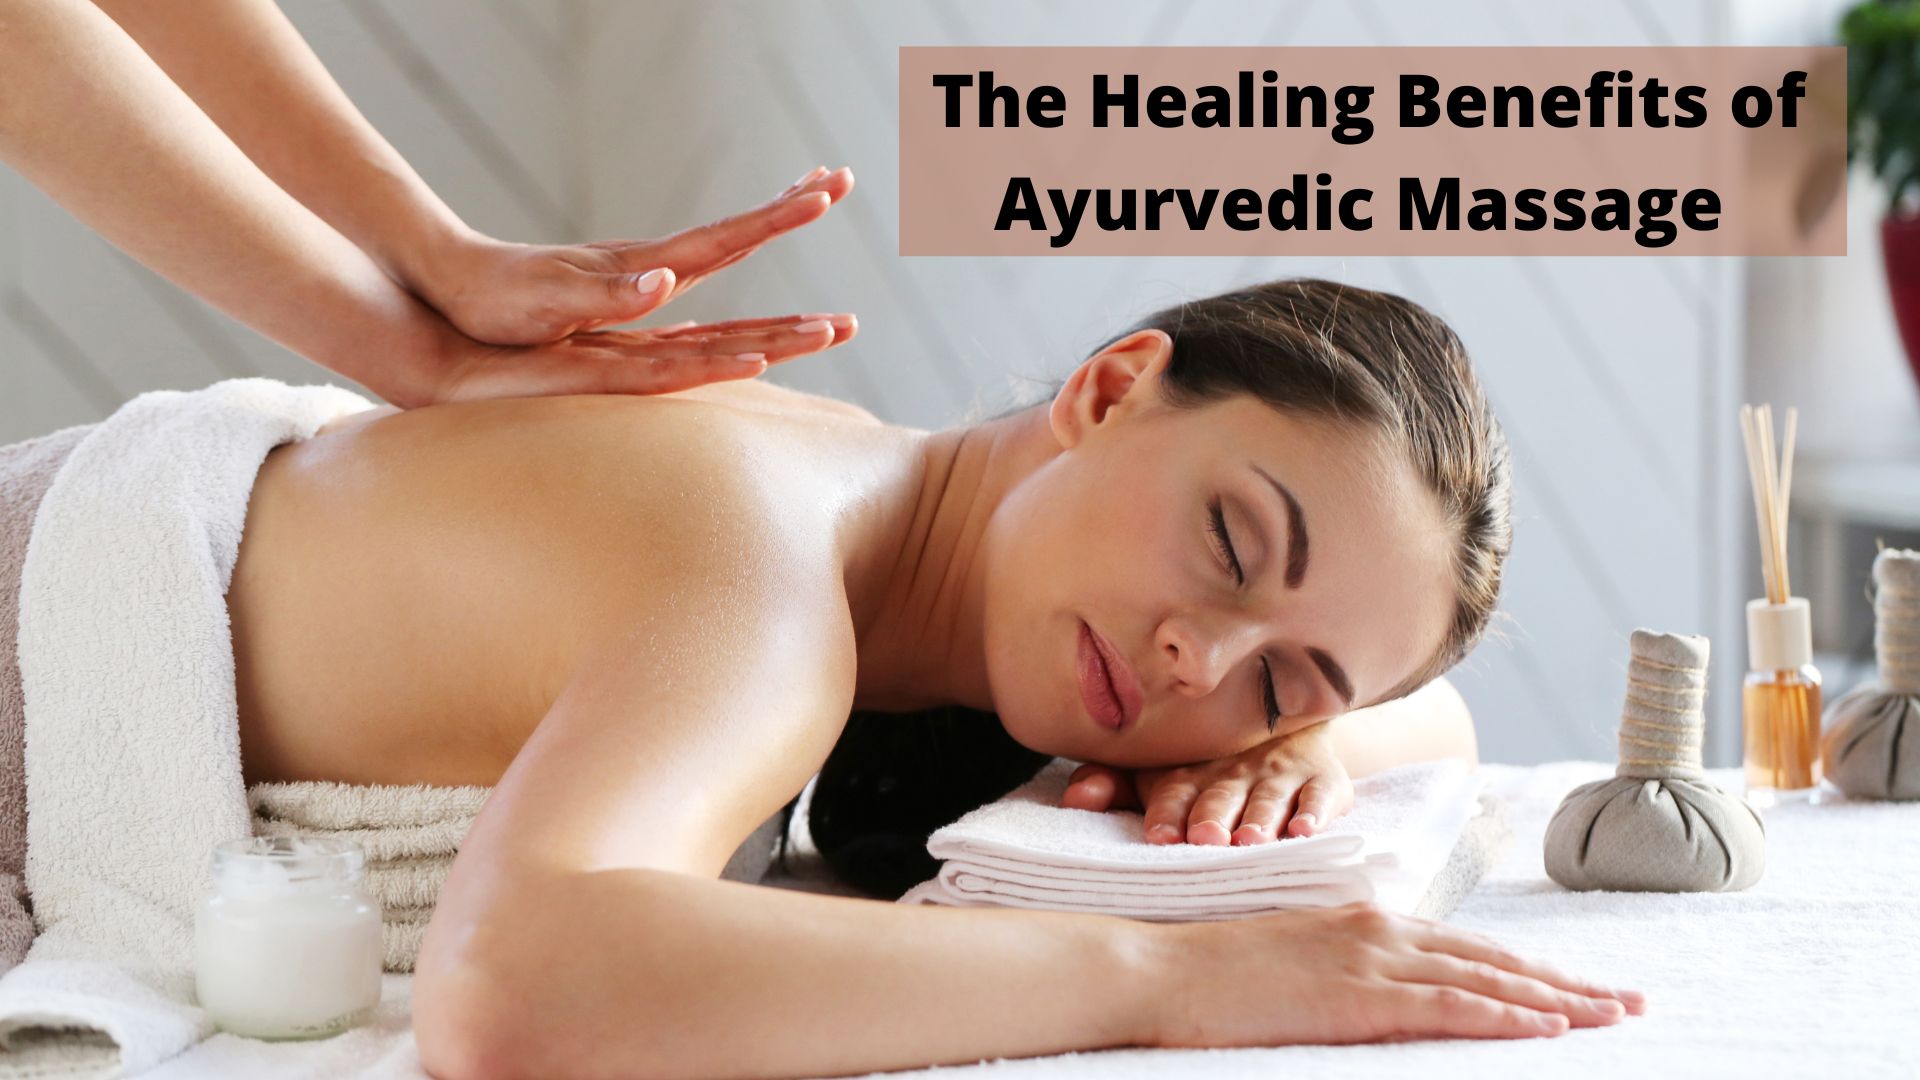 The Benefits of Ayurvedic Self-Massage